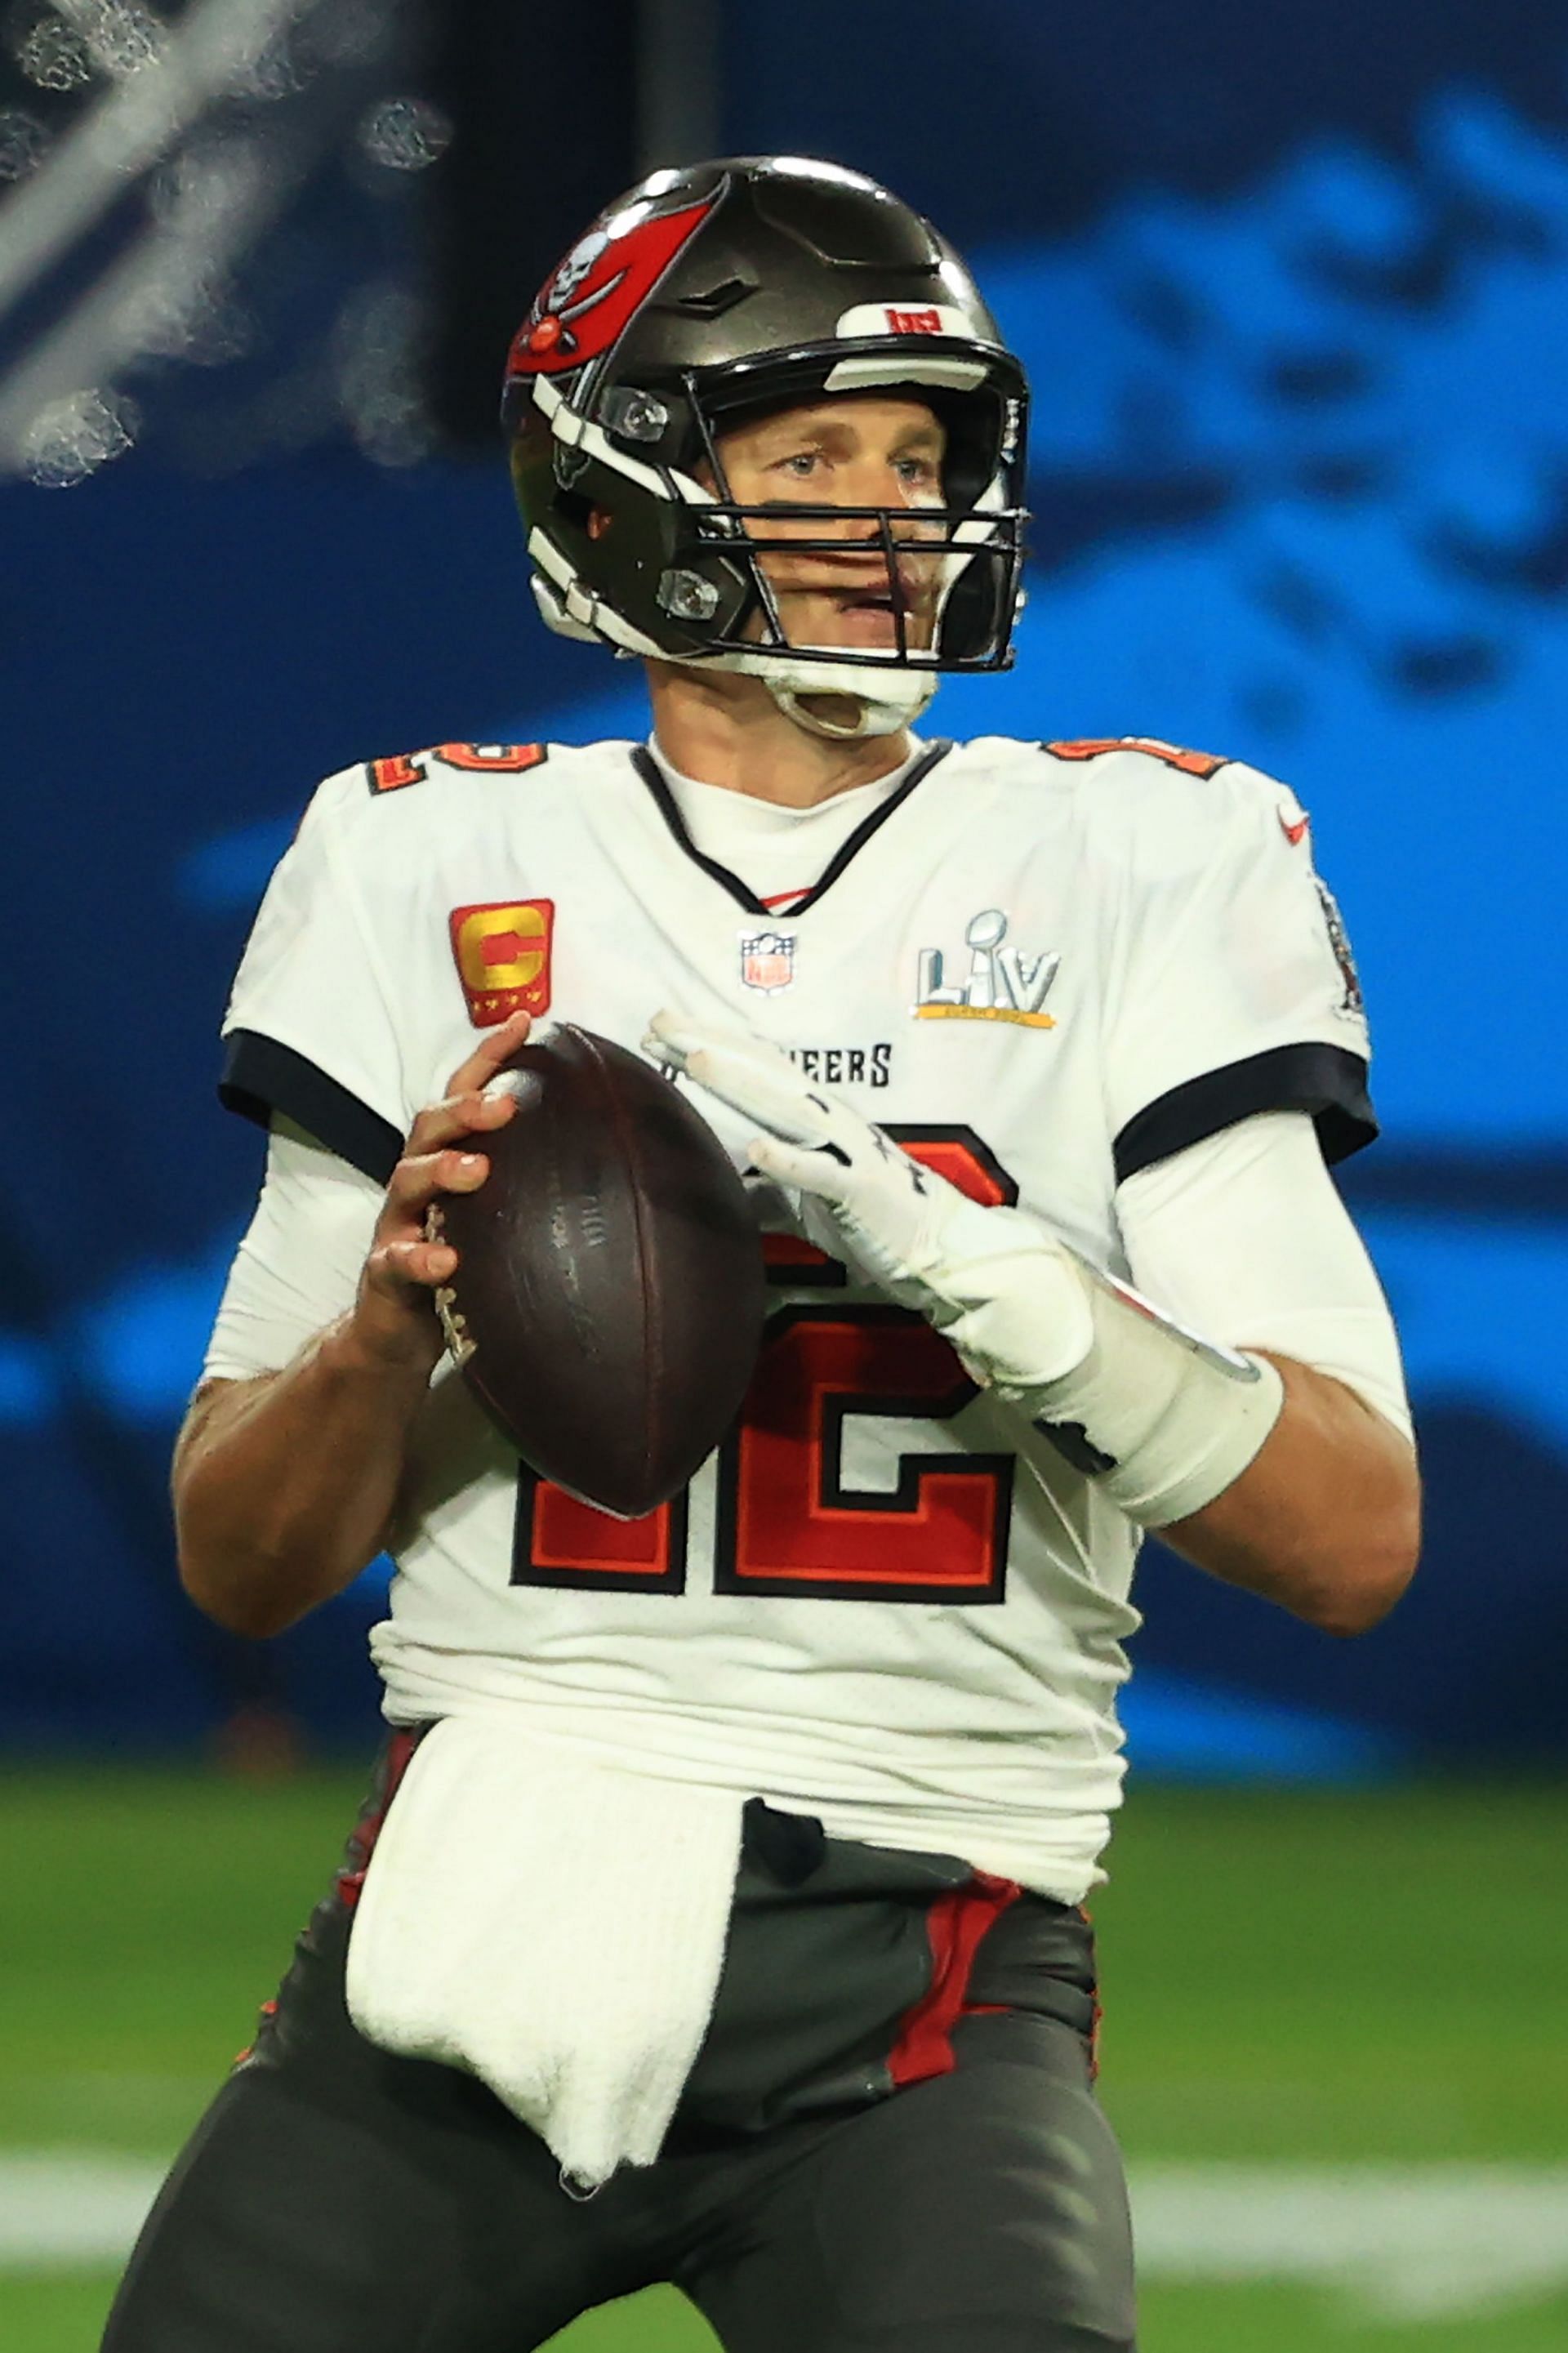 Brady playing in Super Bowl LV